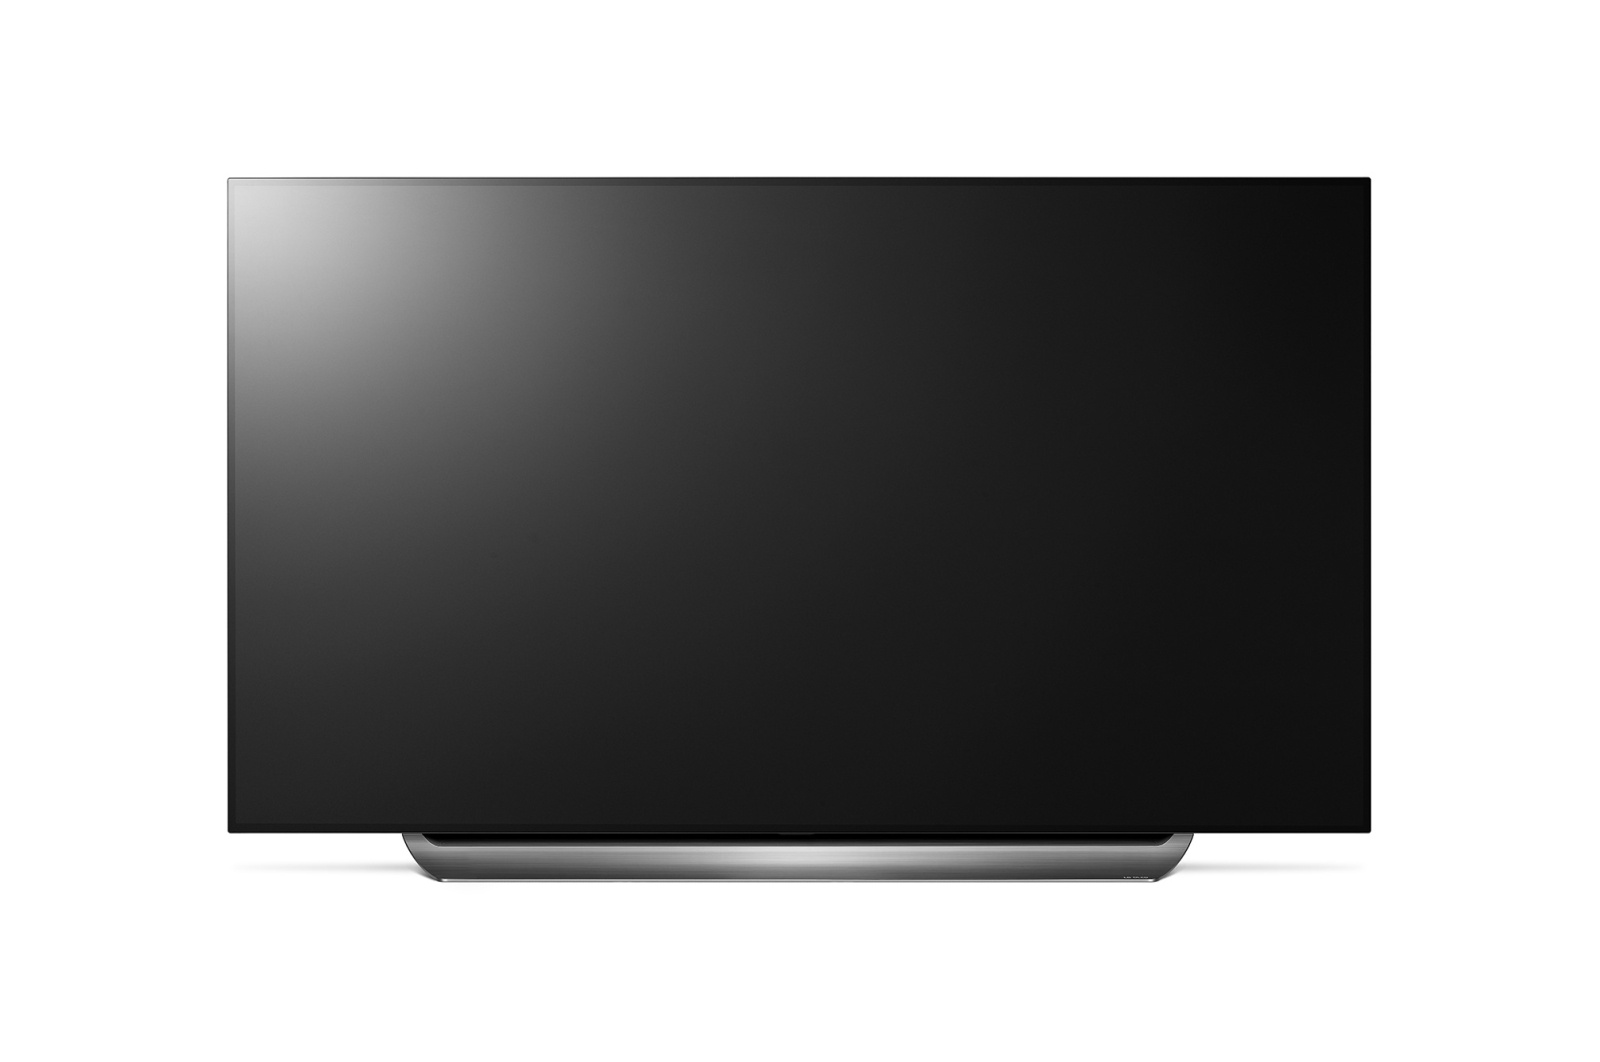 Smart Tivi OLED LG 55 inch 55C9PTA, 4K UHD, HDR